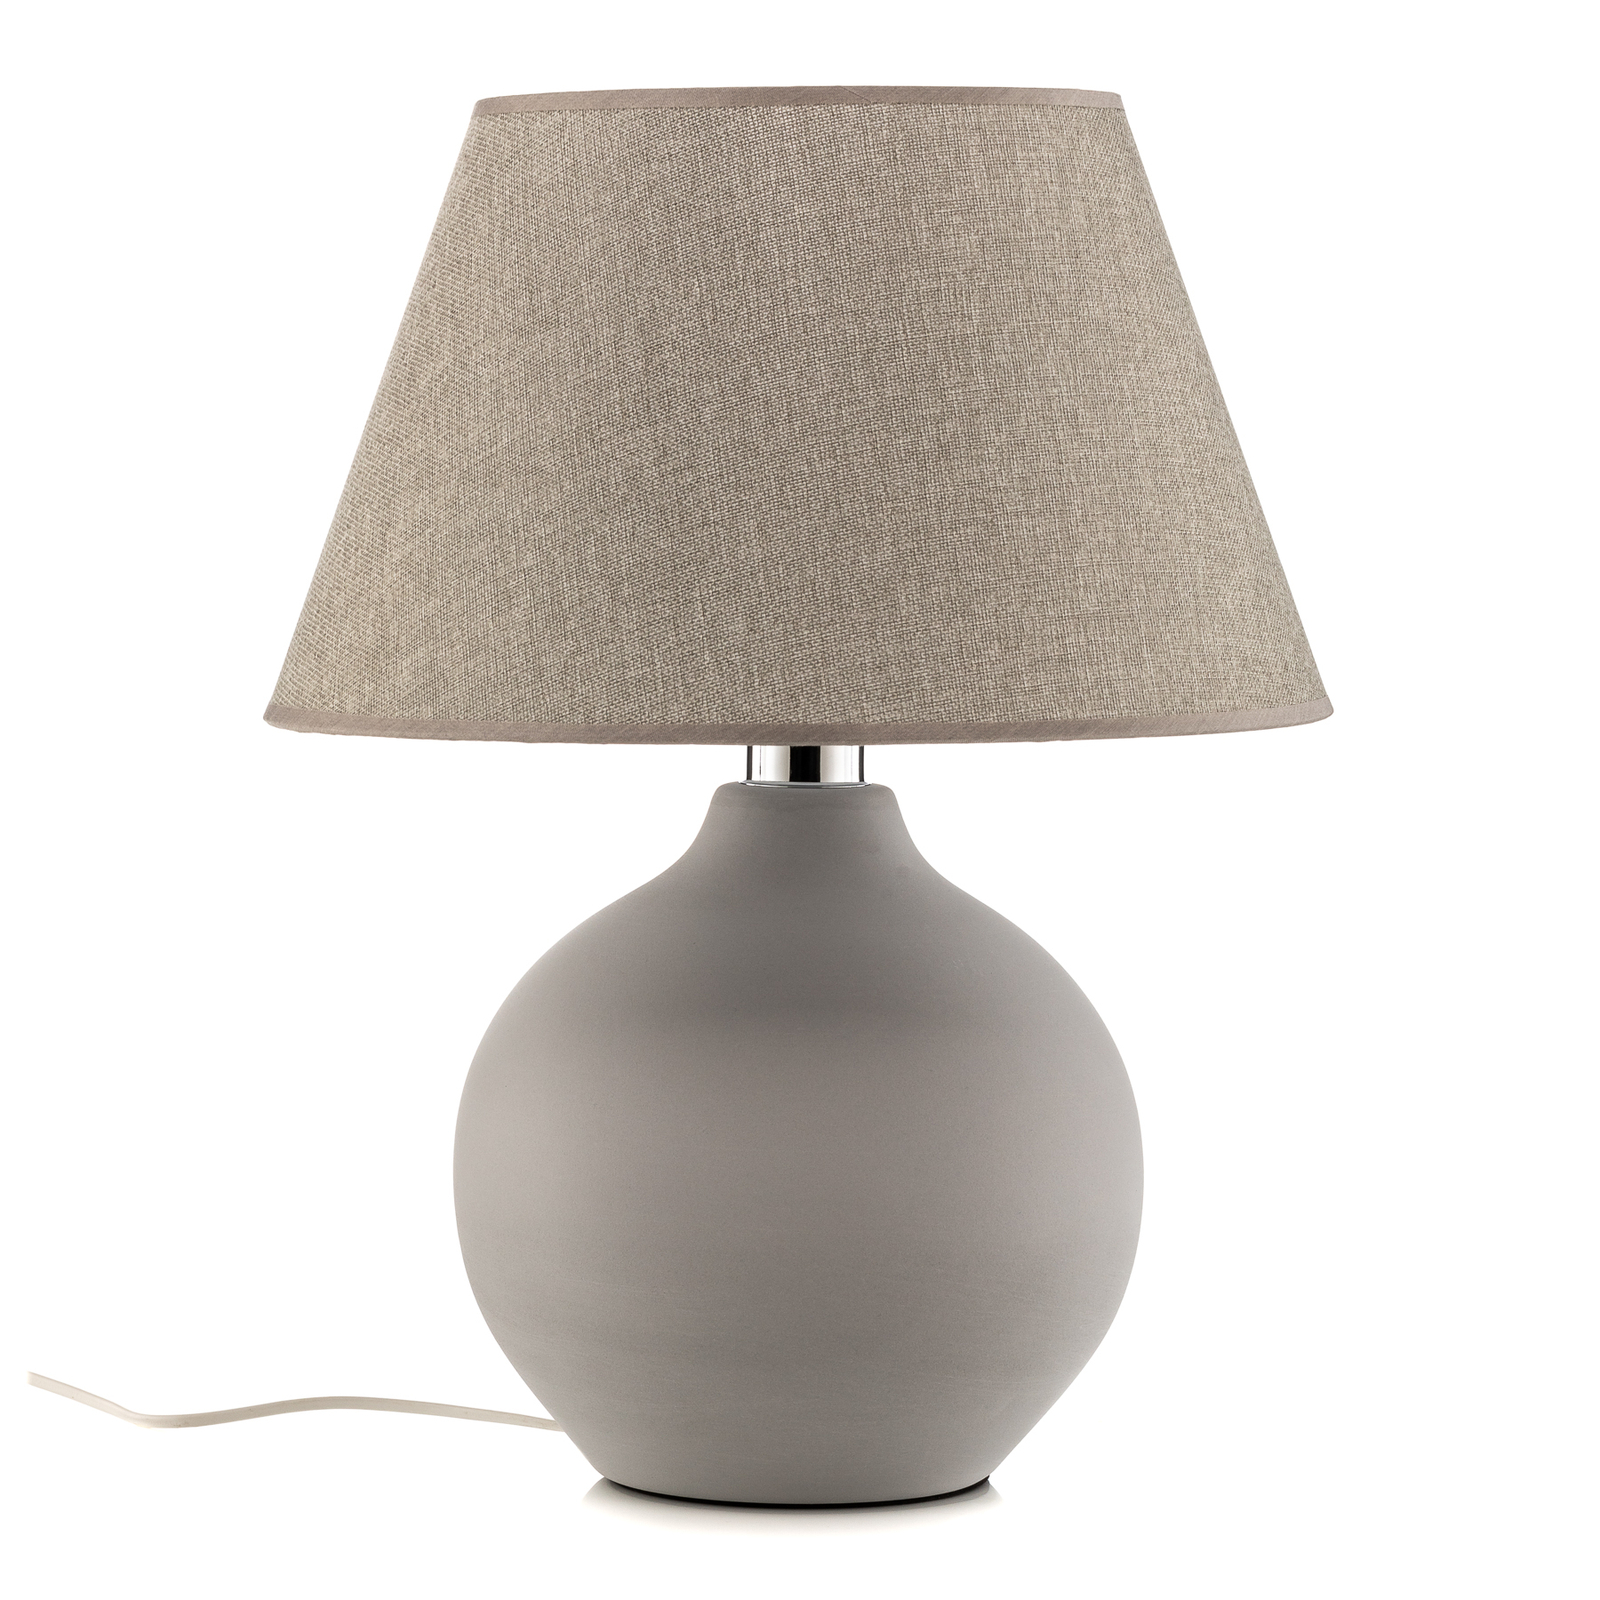 Bordlampe Sfera, høyde 53 cm, sement/grå